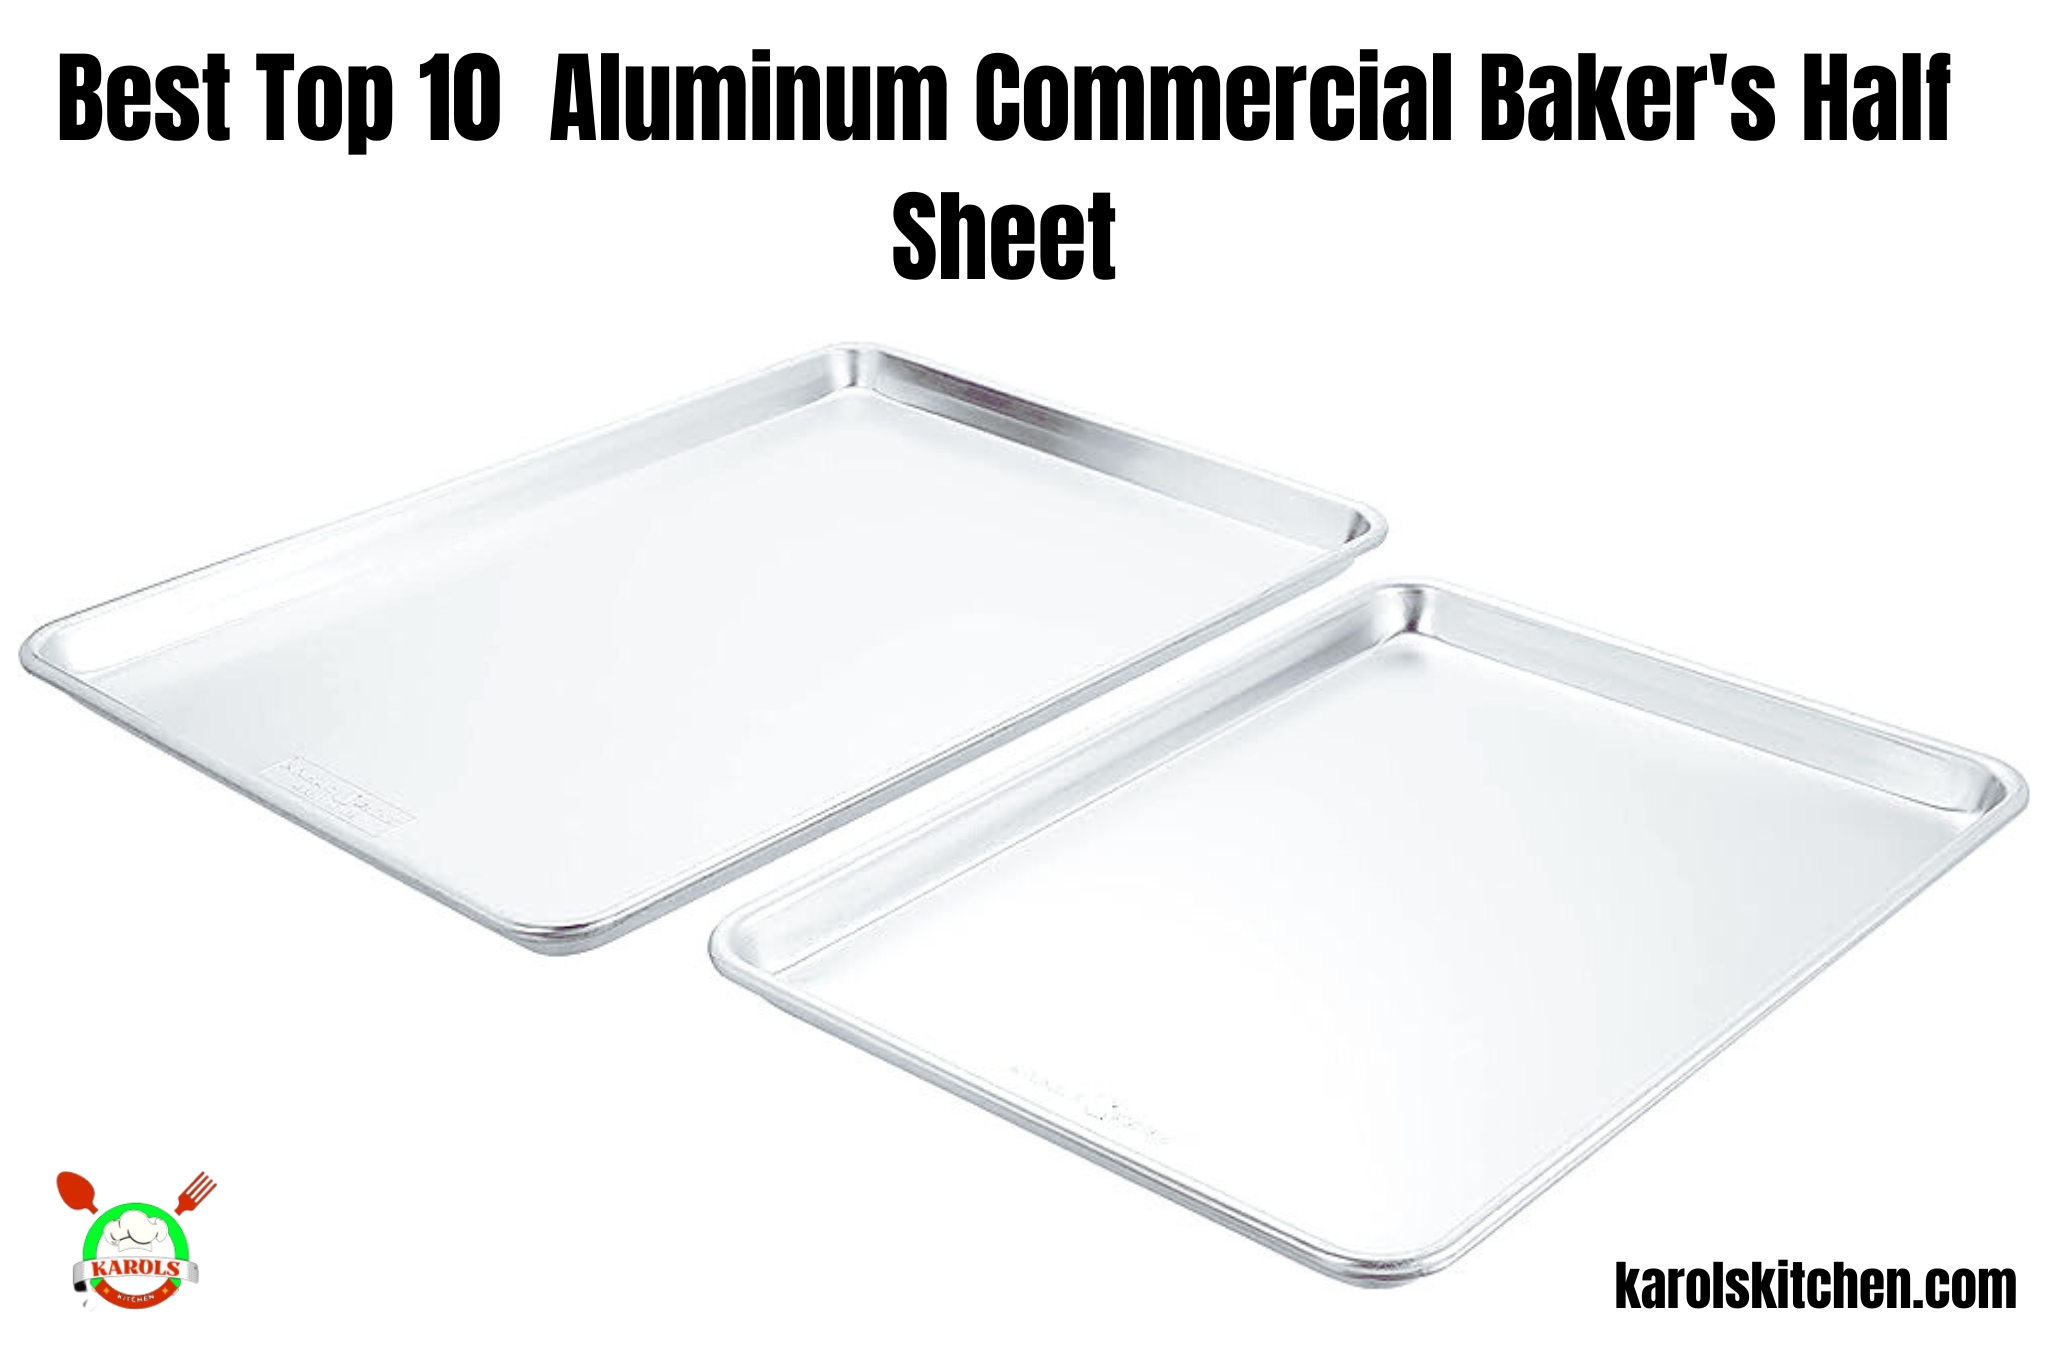 Aluminum Commercial Baker's Half Sheet